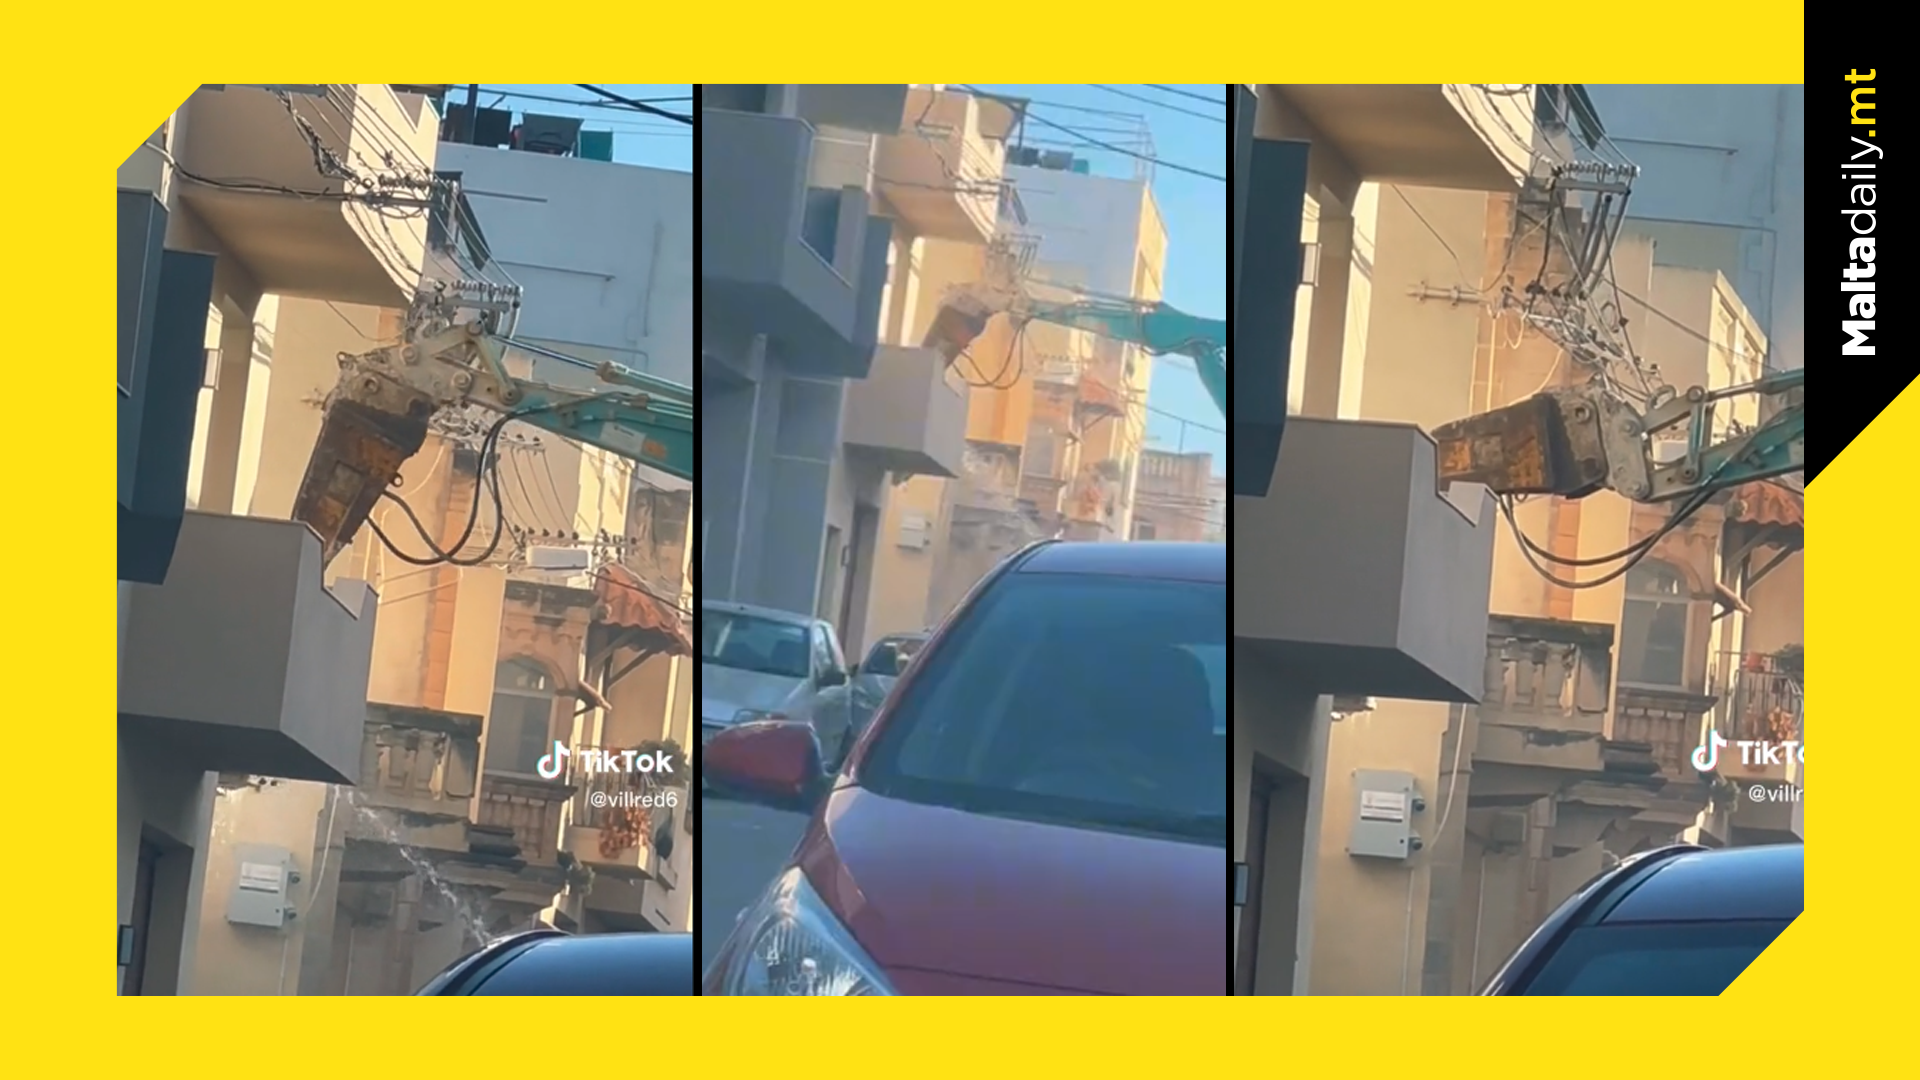 TikTok shows crane caught in street power cables in Malta